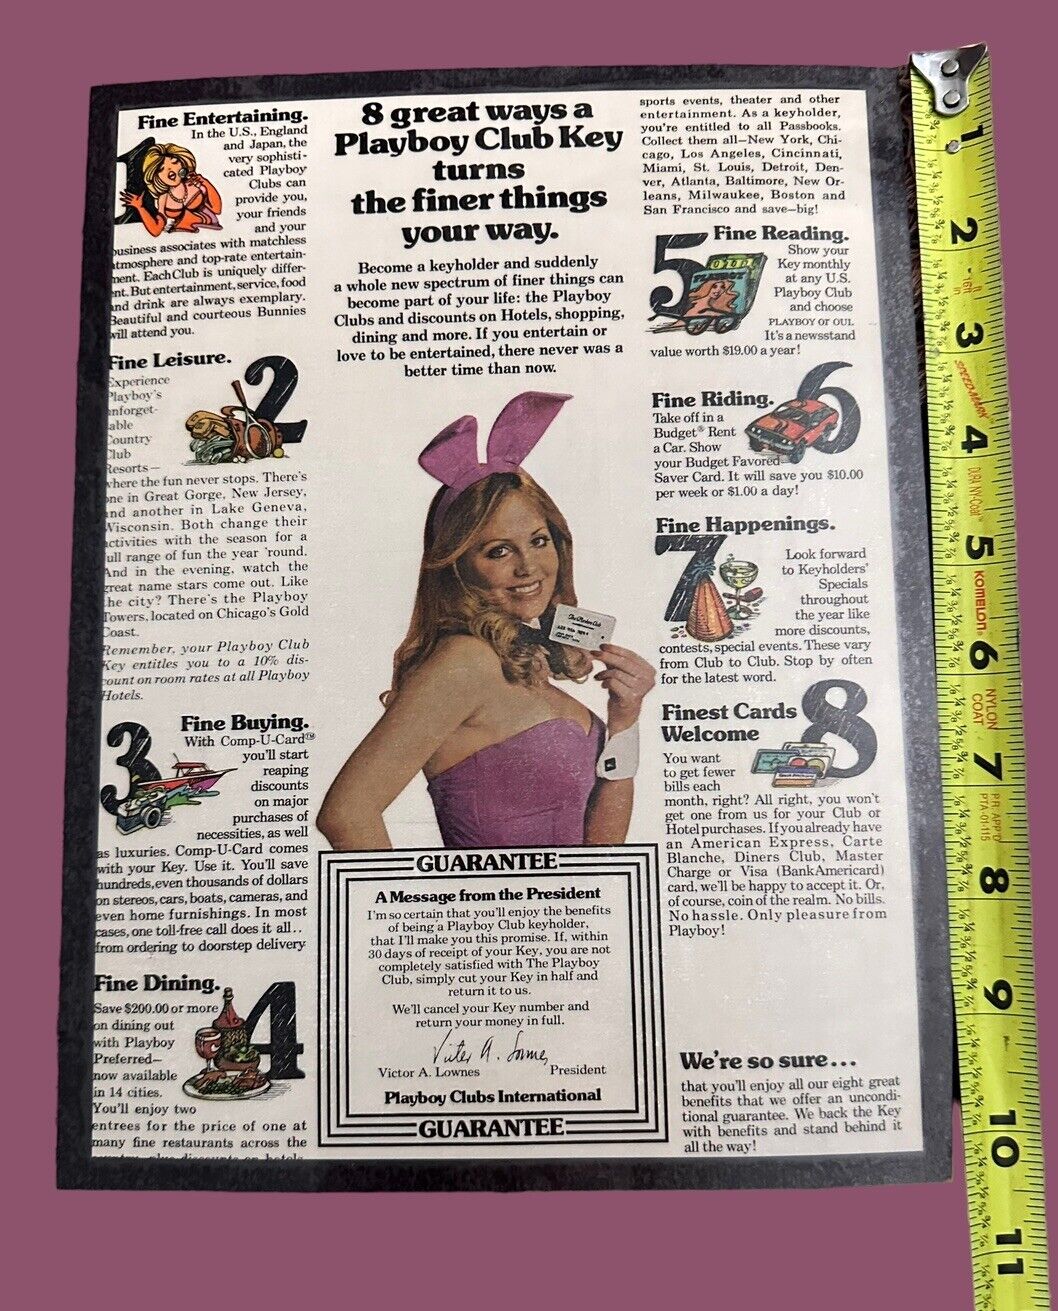 Vtg Playboy Club Bunny Poster Laminated Print Ad Ephemera 10”x8”